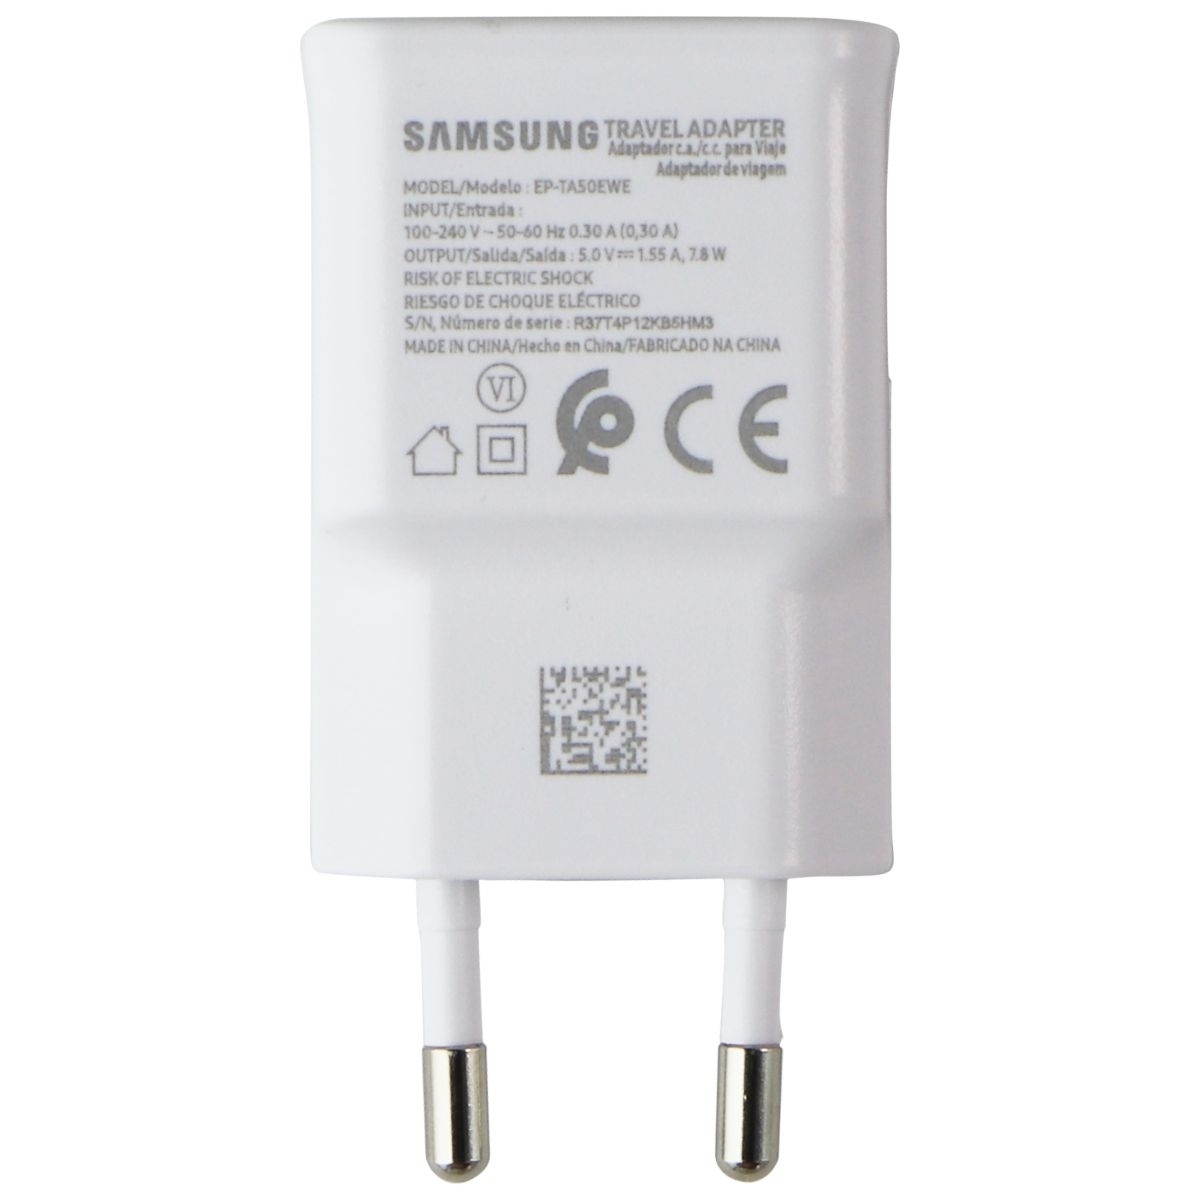 Samsung (5V/1.55A) 7.8W Travel Adapter (EU Plug) Charger - White (EP-TA50EWE)